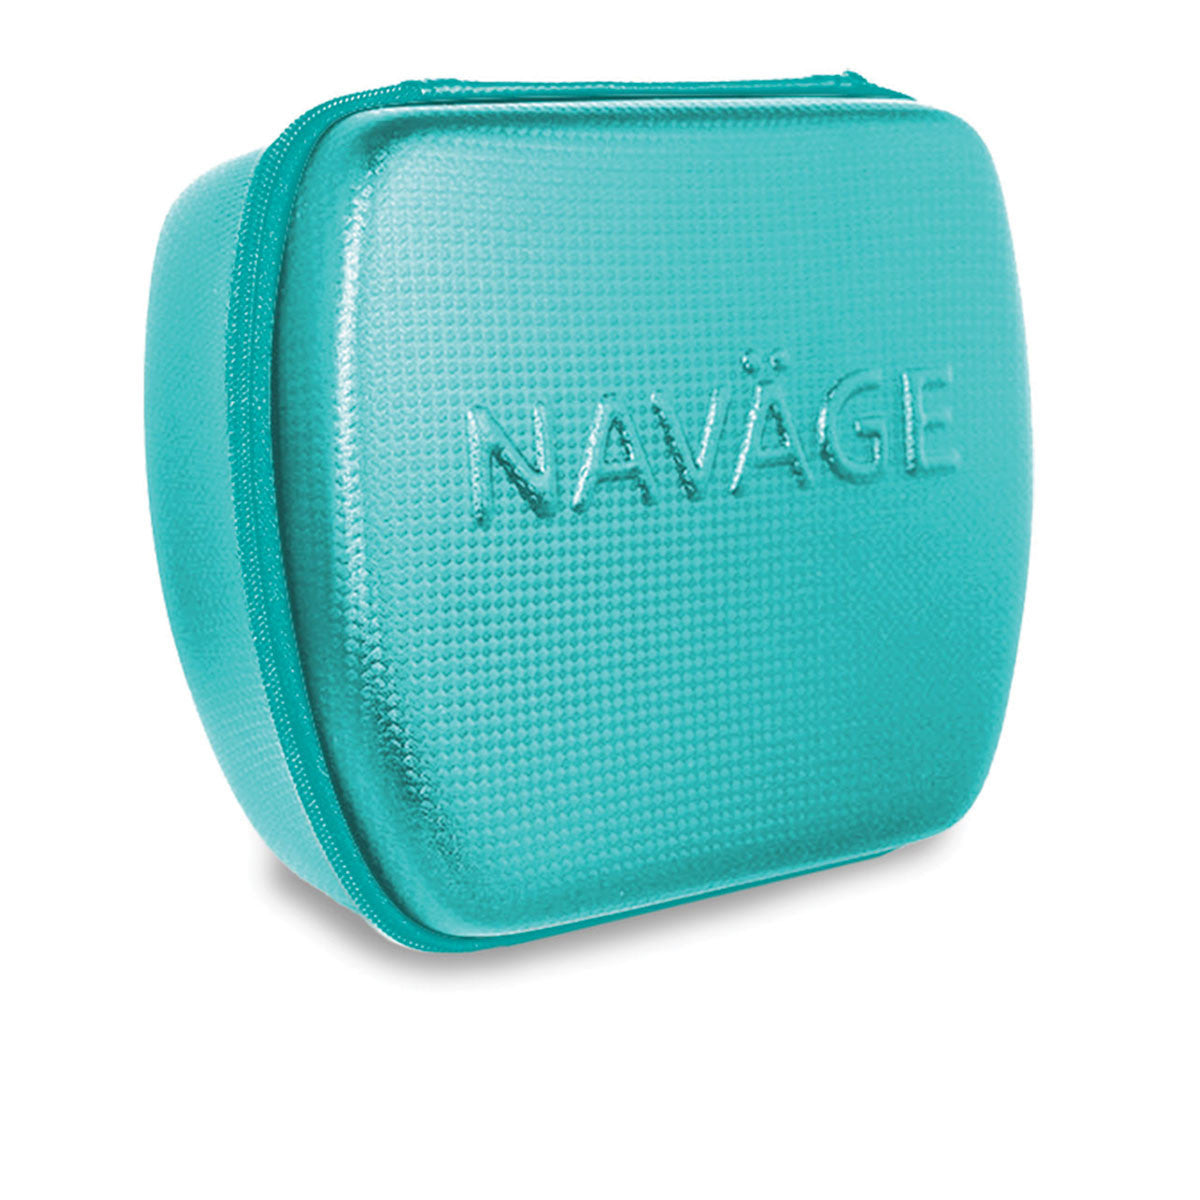 Navage Nasal Care Starter Bundle: Navage Nose Cleaner, 20 SaltPods, Plus  Bonus 10 SaltPods